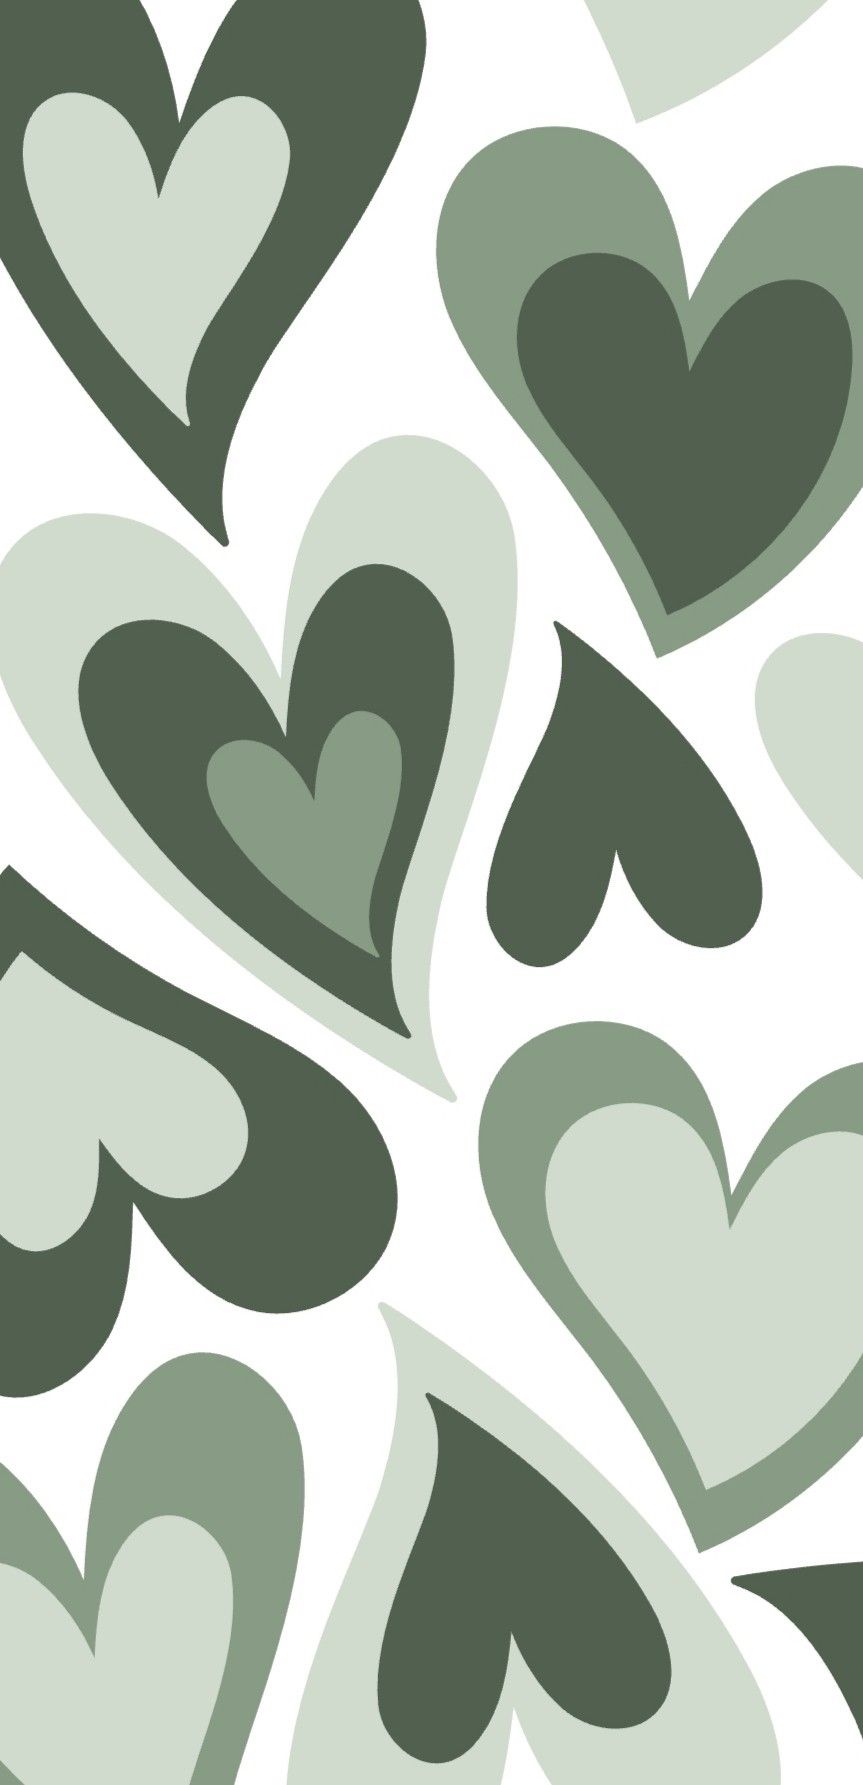 y2k heart green wallpaper. Fondos de pantallla, Fondos, Fondos de pantalla